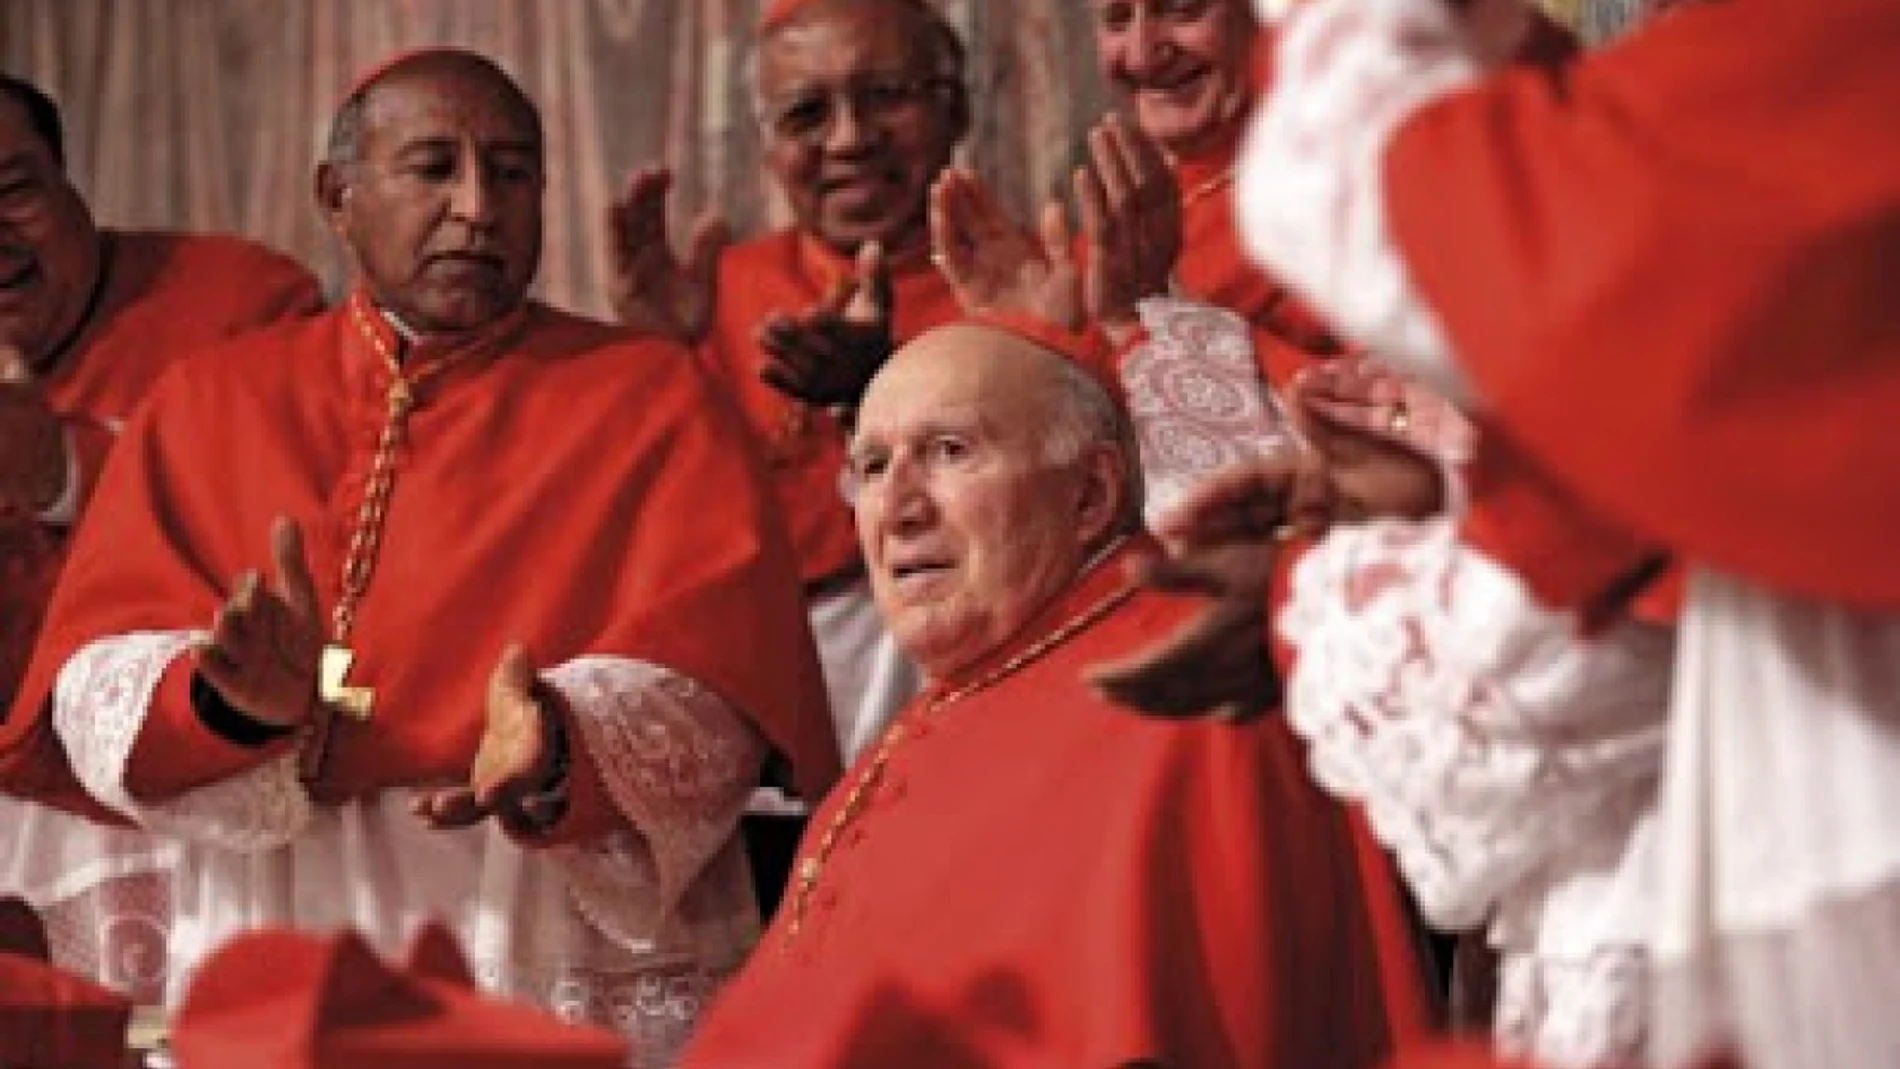 Piccoli como el pontífice de "Habemus Papam", de Nani Moretti